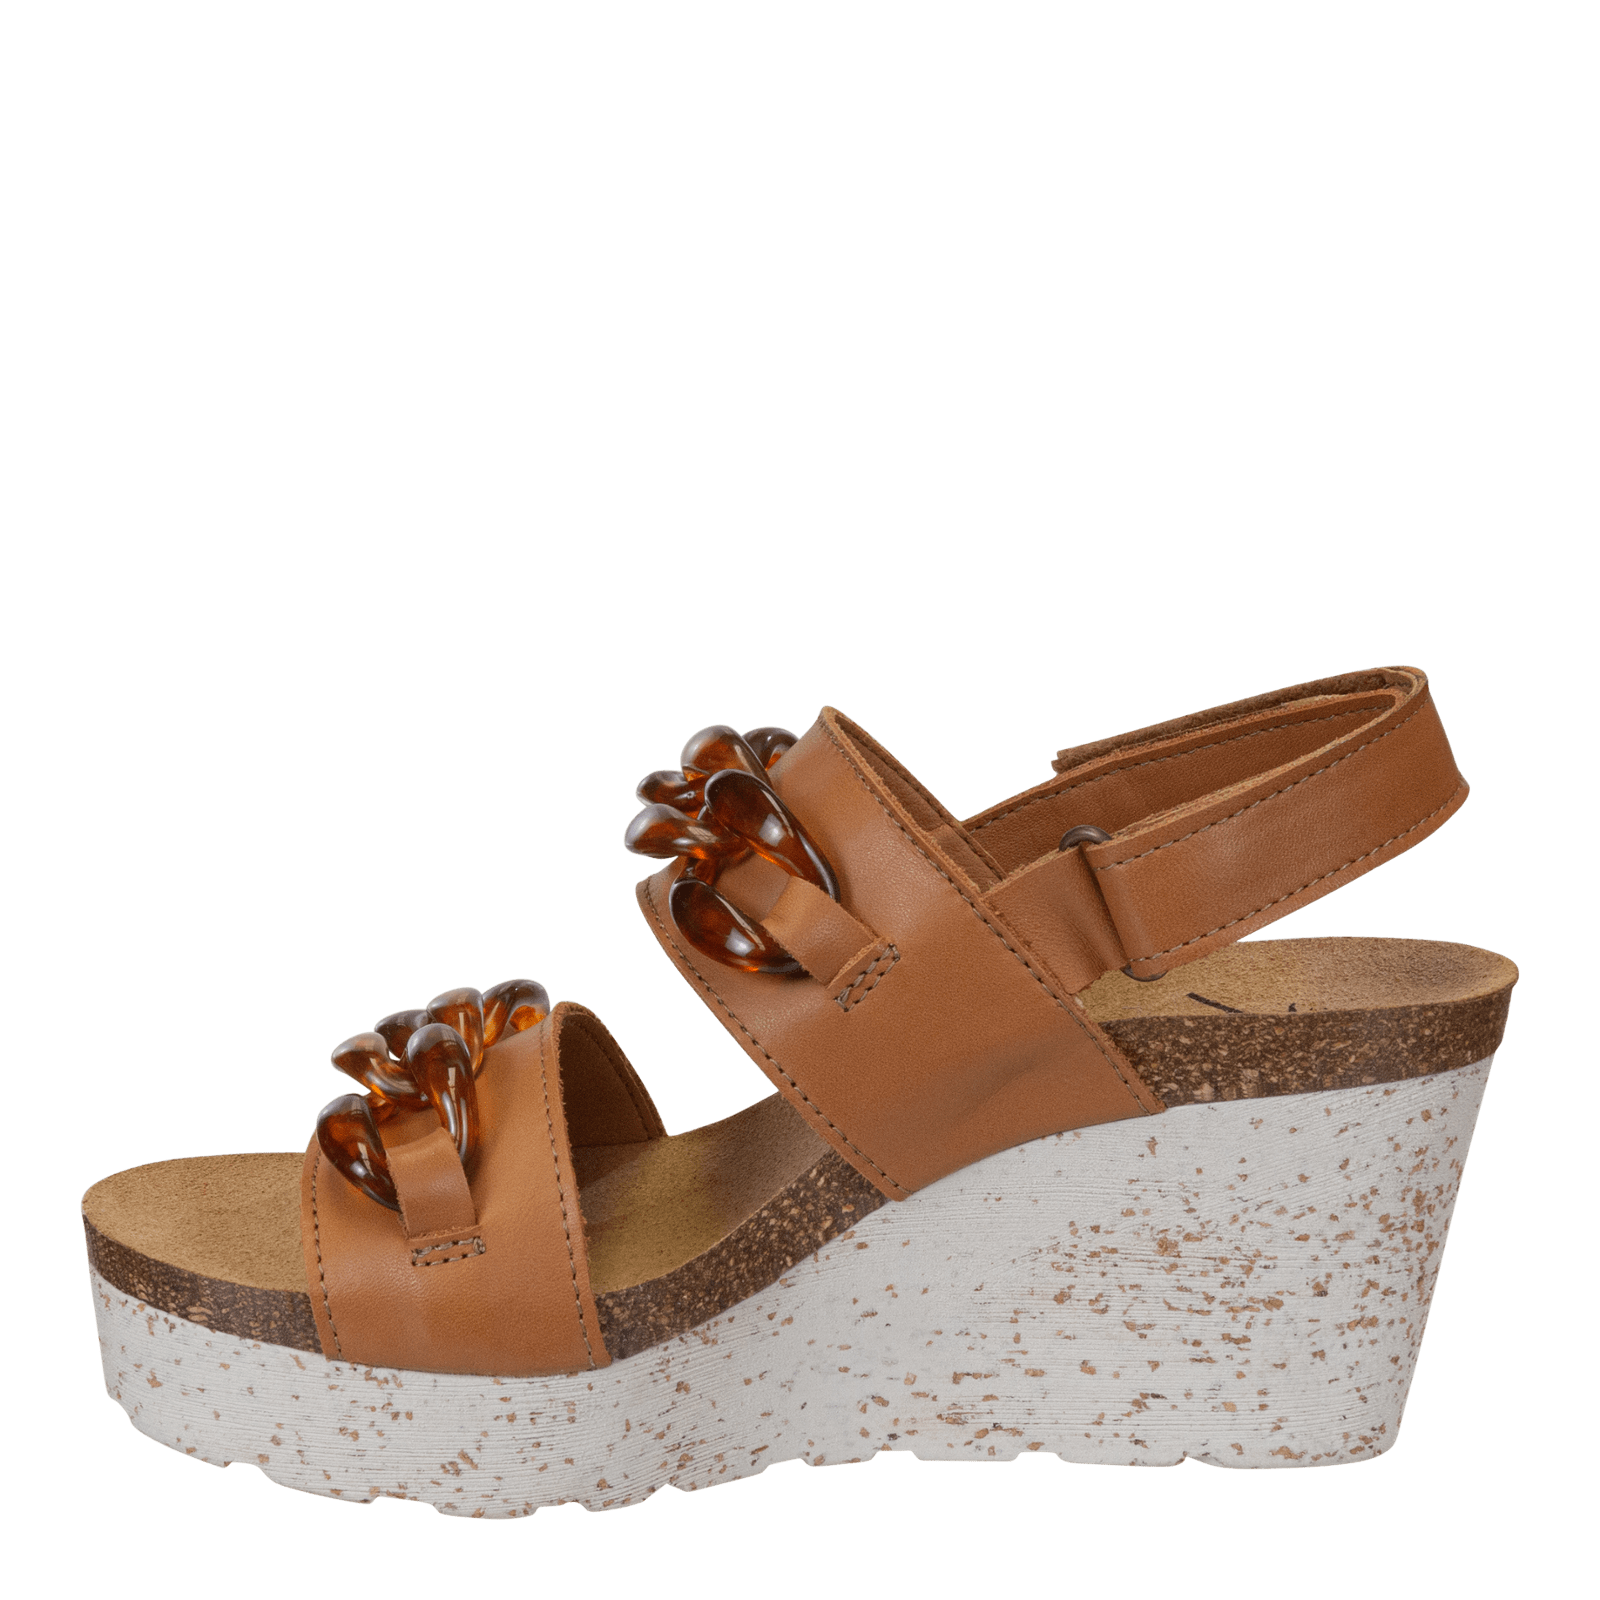 FAIR ISLE in CAMEL Wedge Sandals